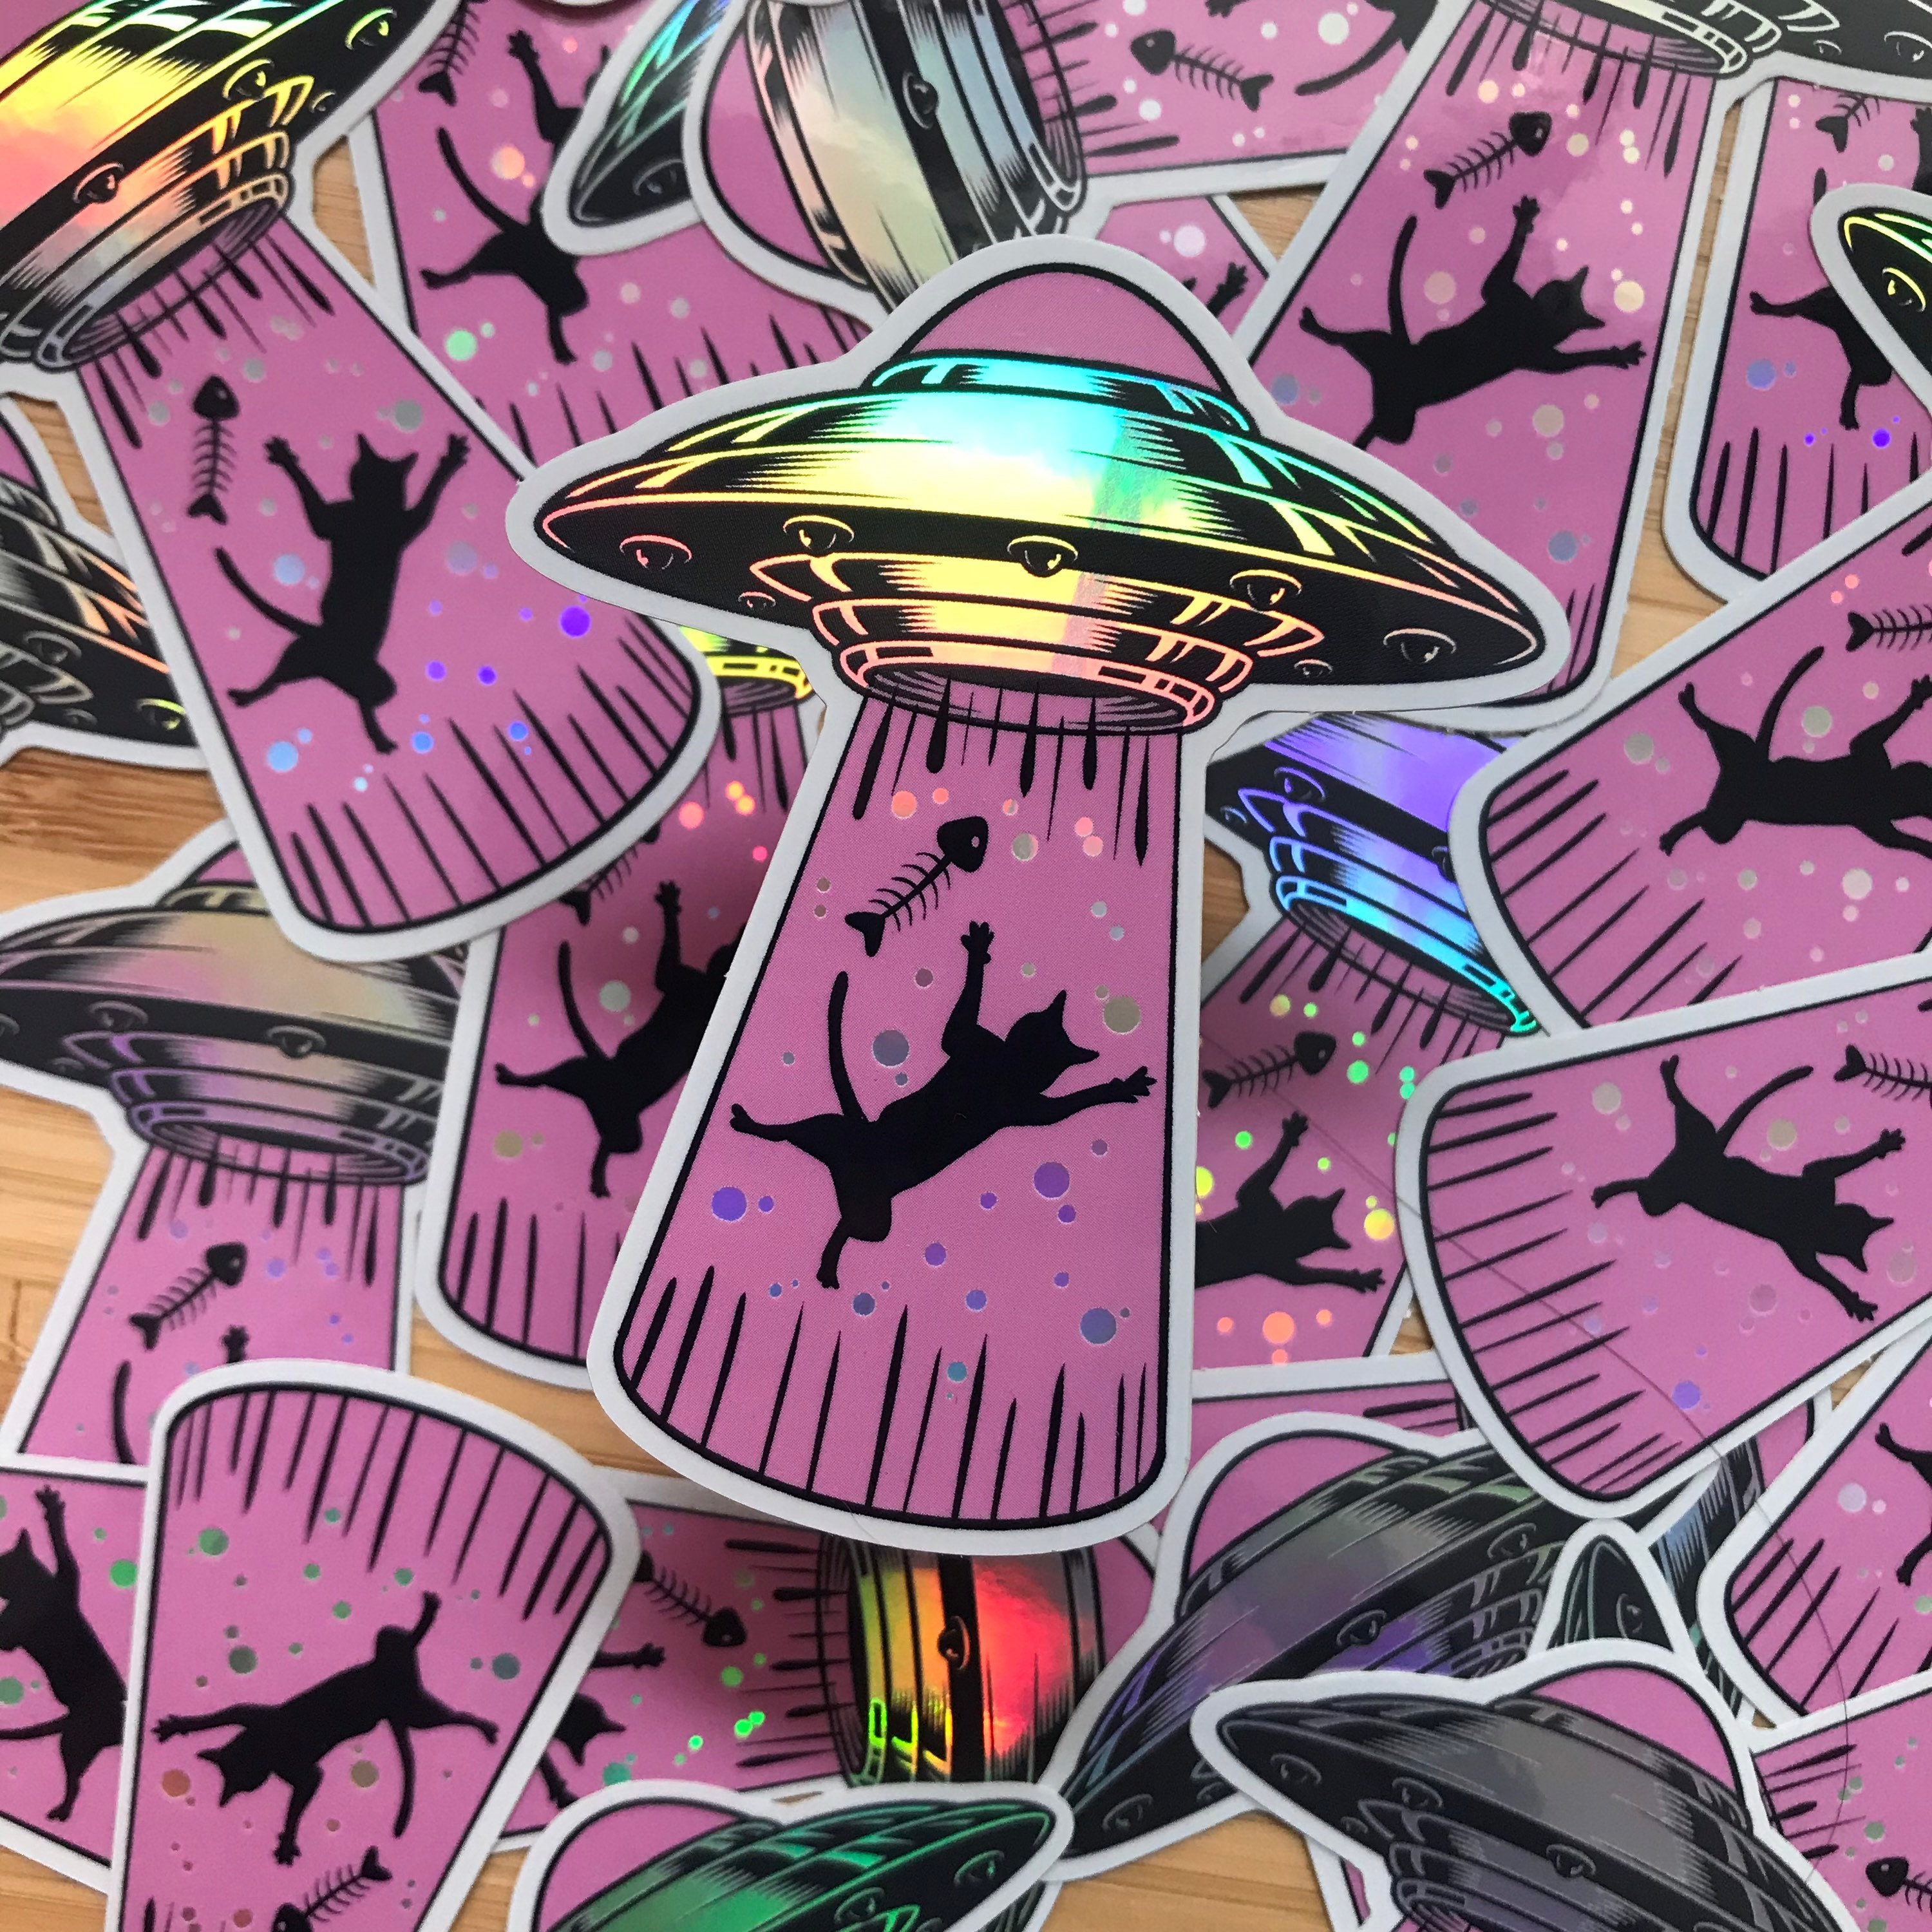 Premium Sticker - Sparkly Holographic Glitter Spaceship Take Me Away